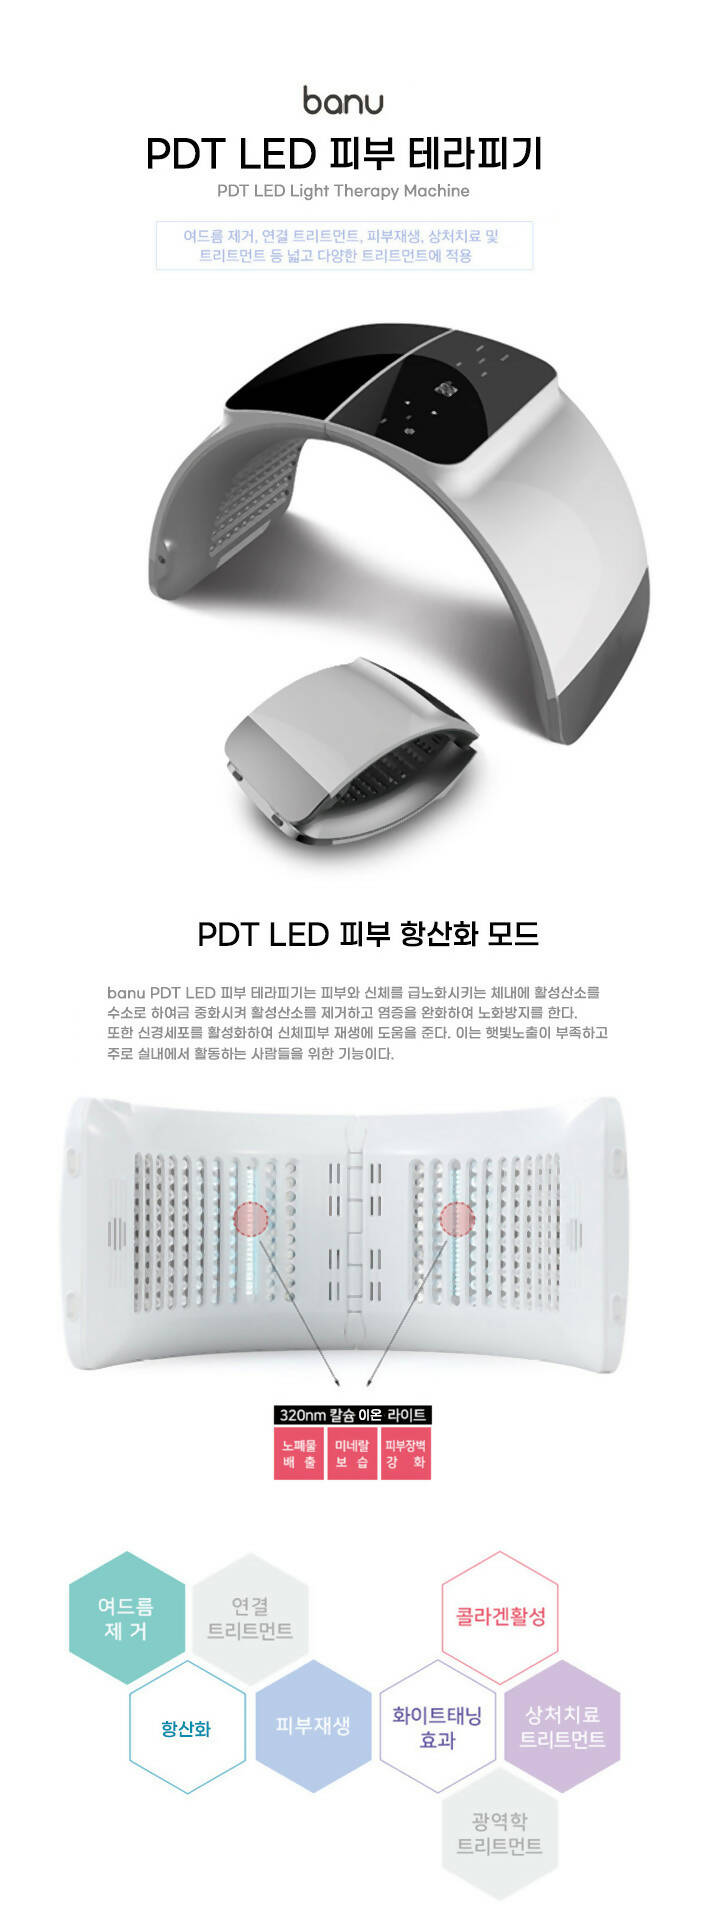 [banu] PDT LED Light Therapy